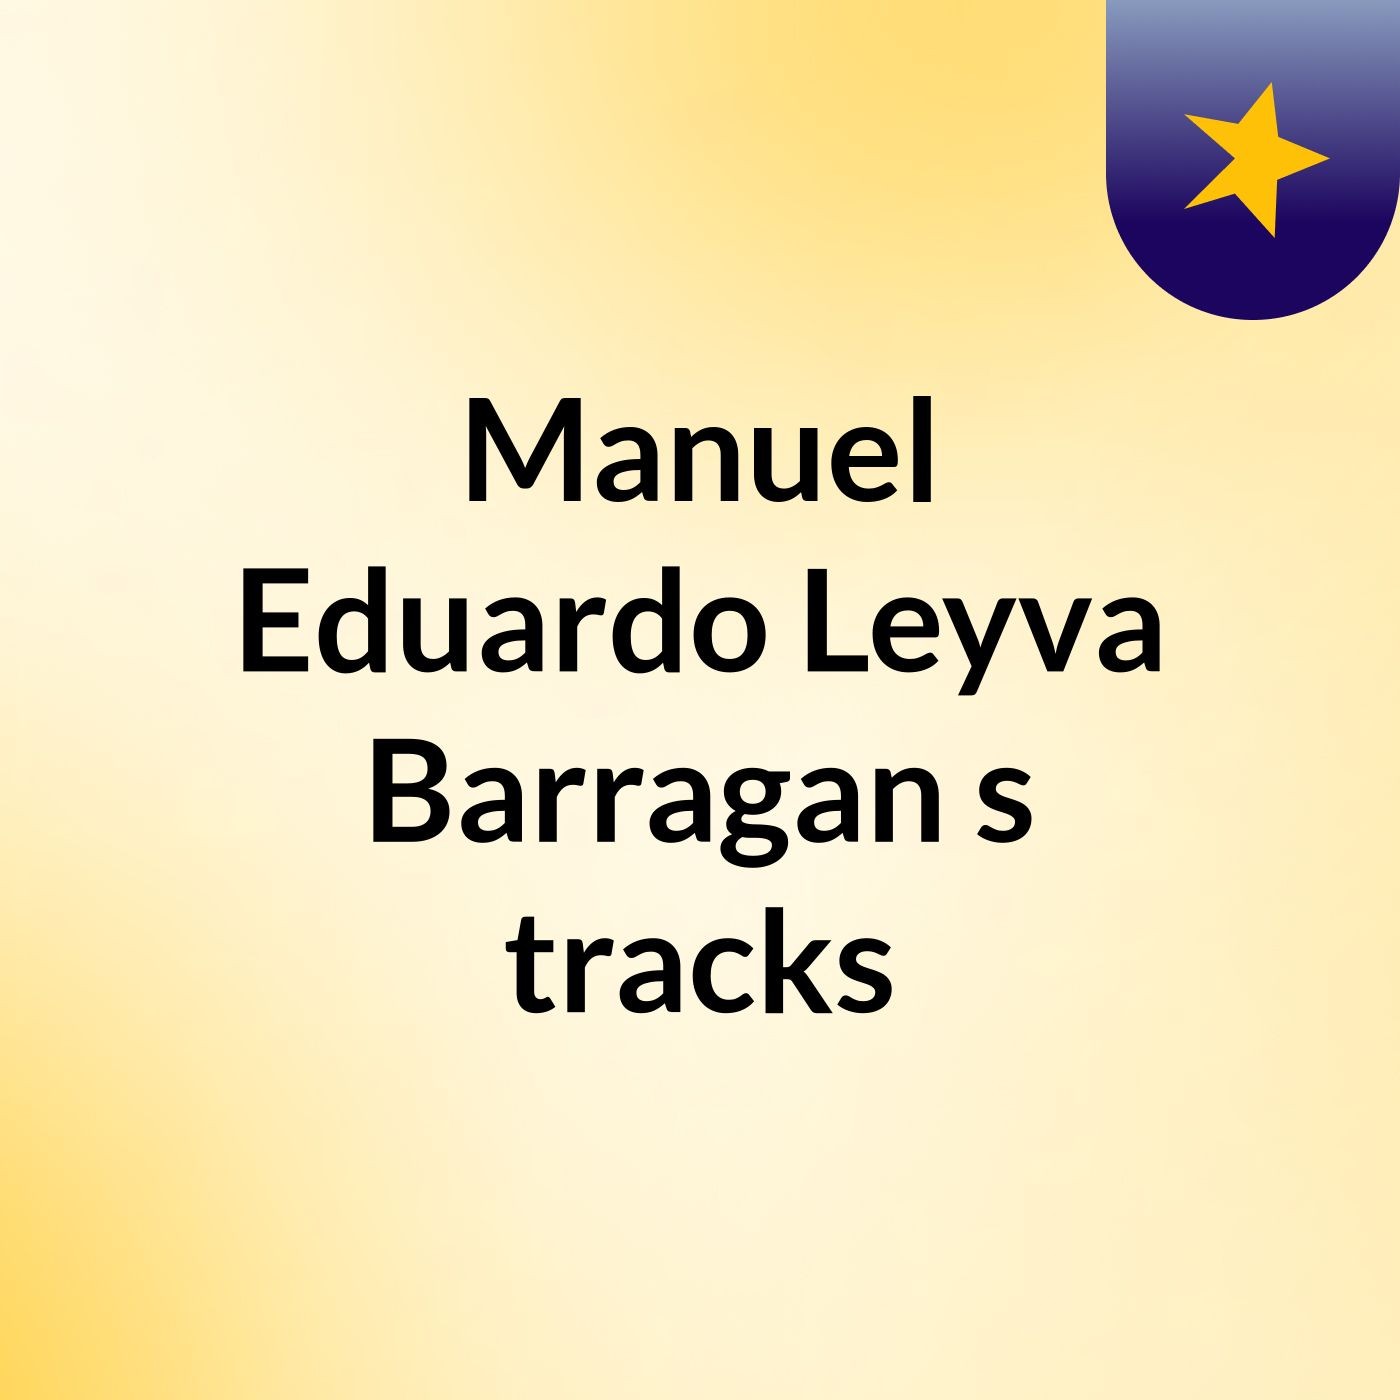 Manuel Eduardo Leyva Barragan's tracks